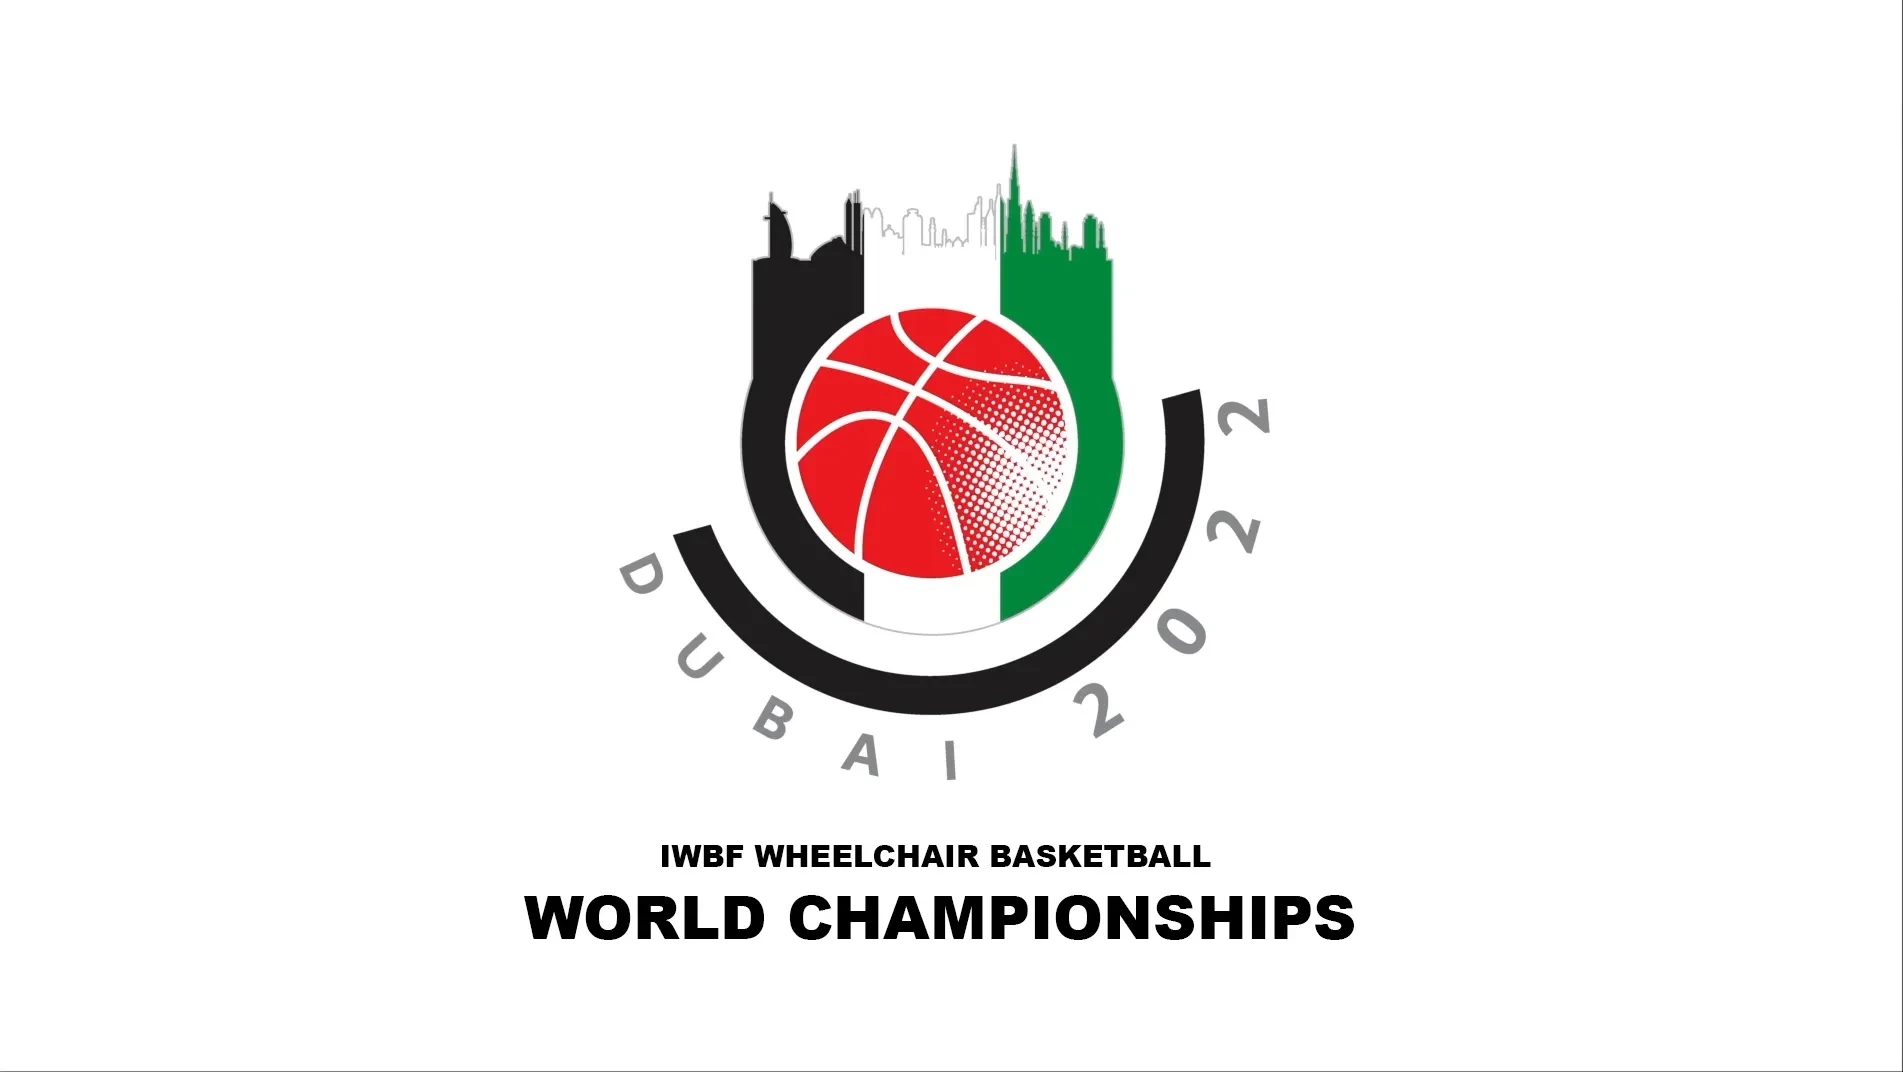 Fields for IWBF Wheelchair Basketball World Championship announced